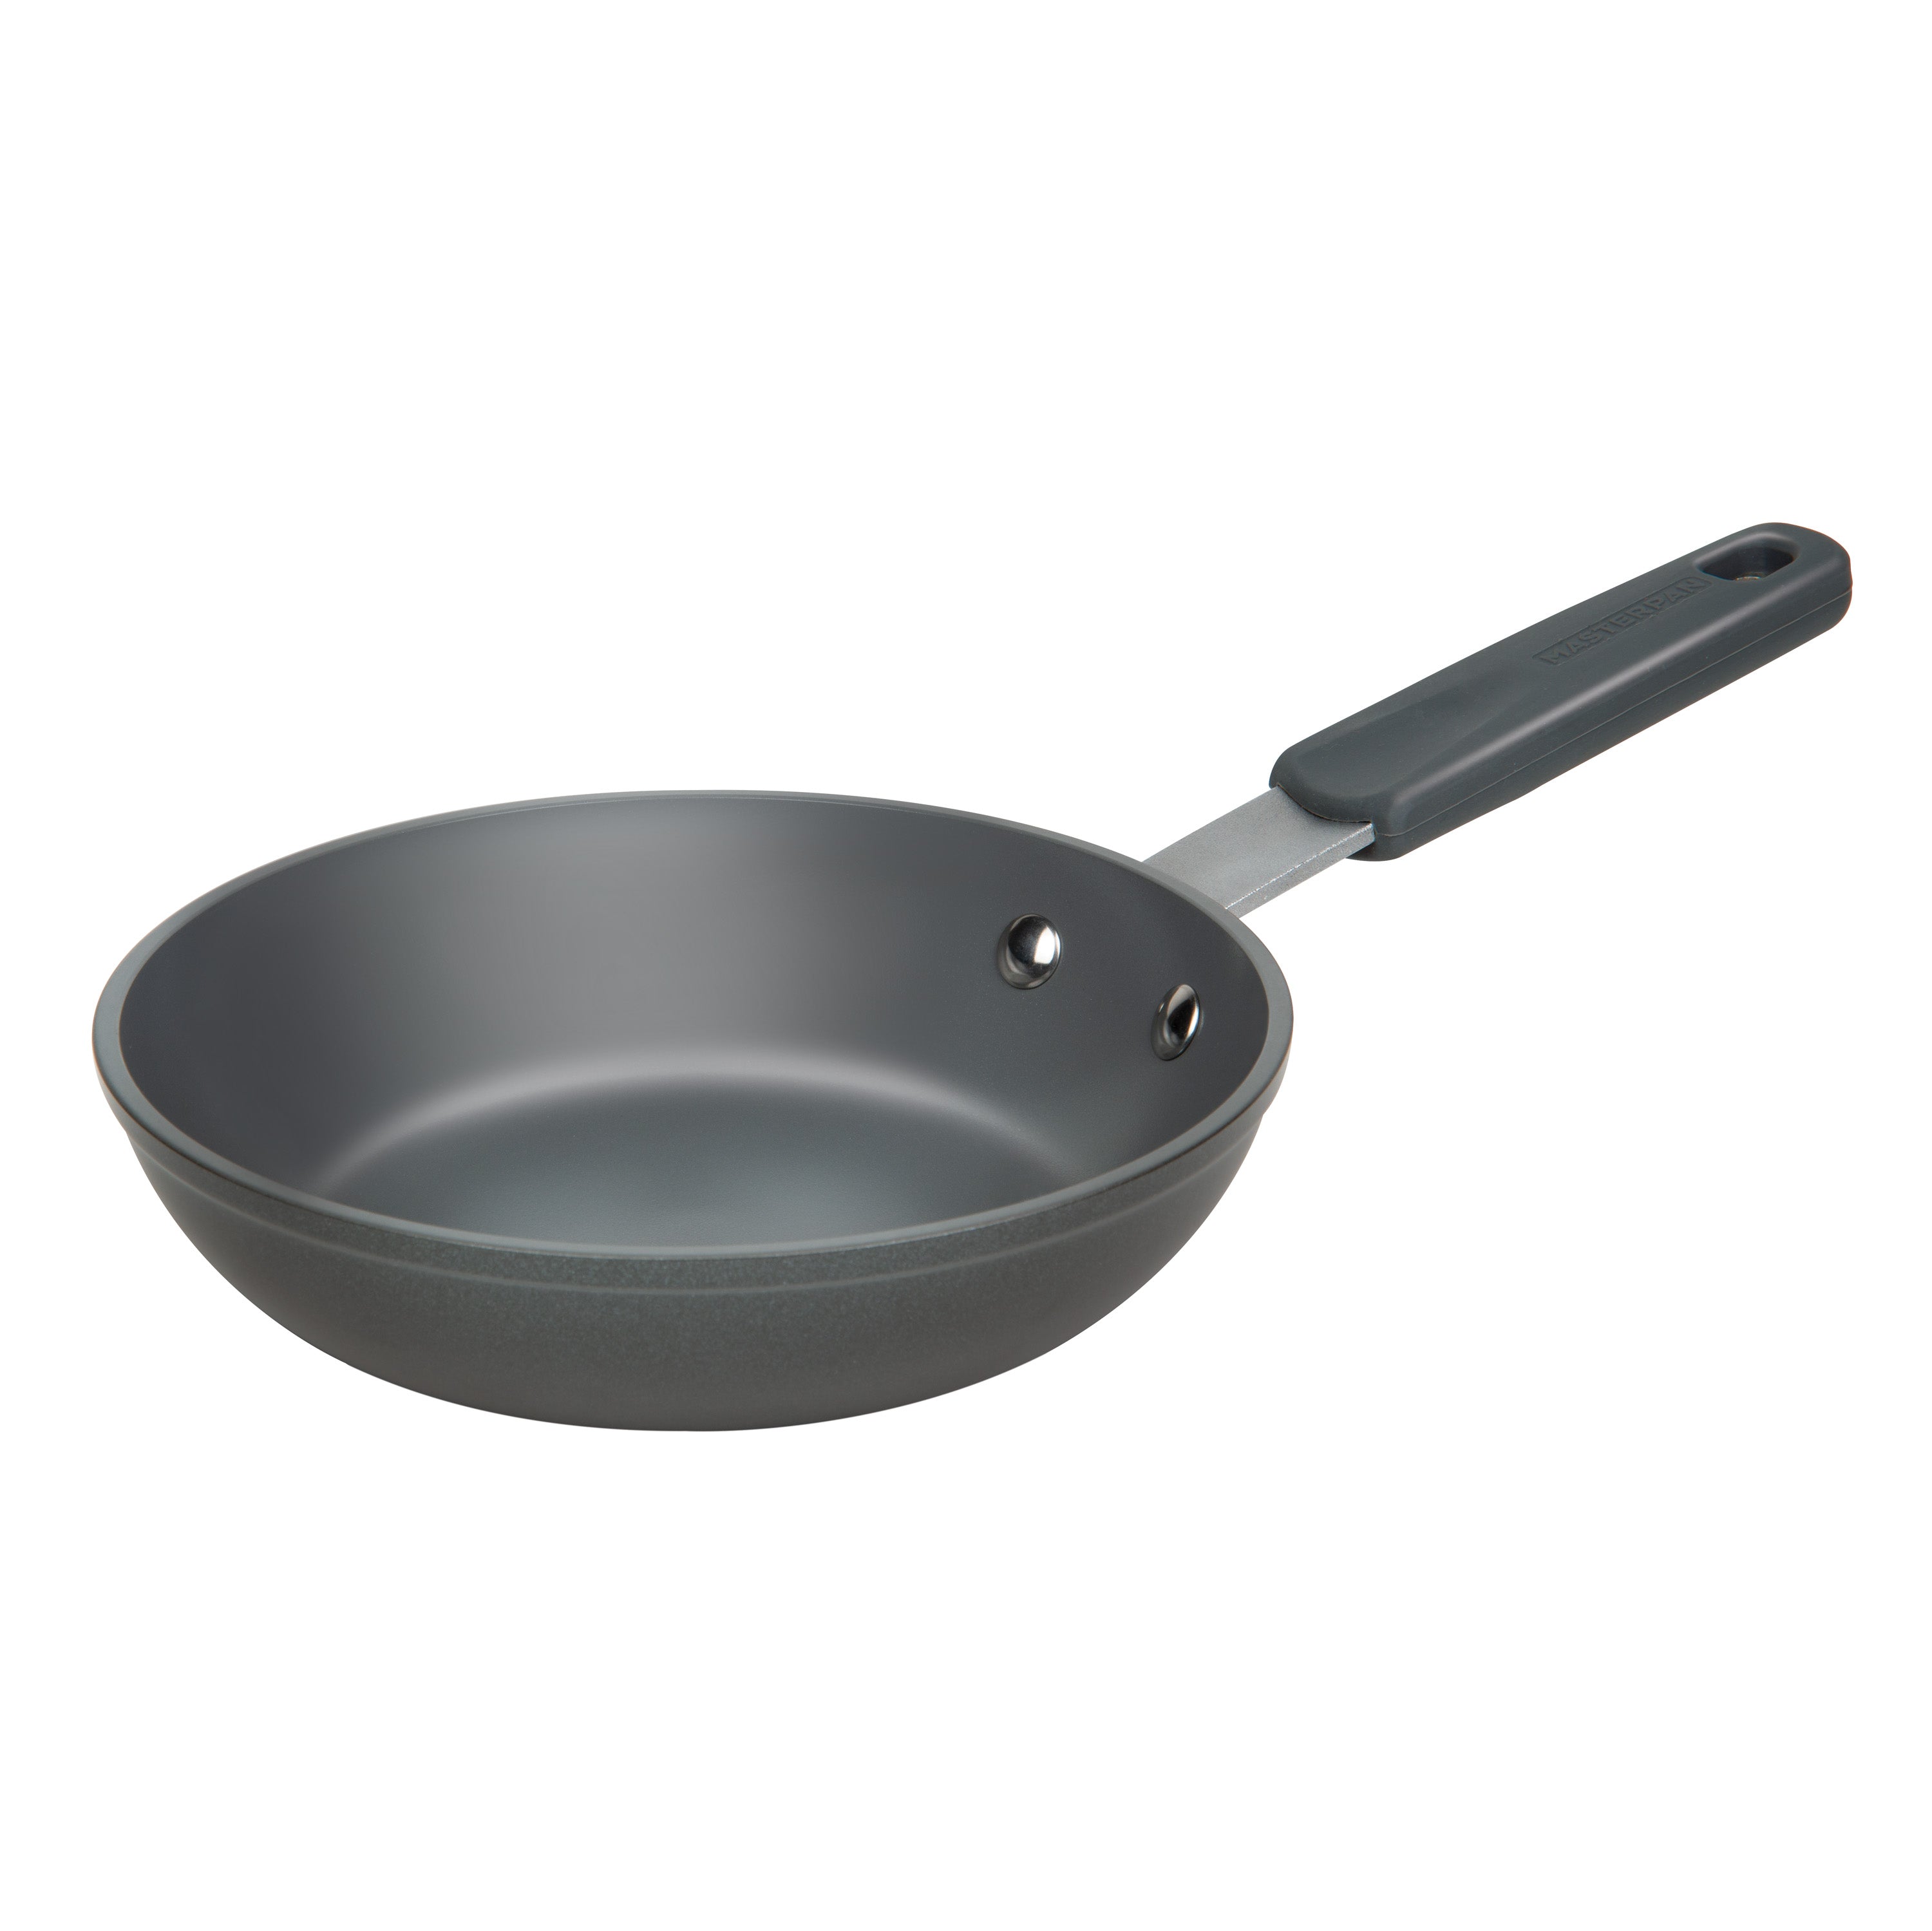 8 Ceramic Nonstick Fry Pan